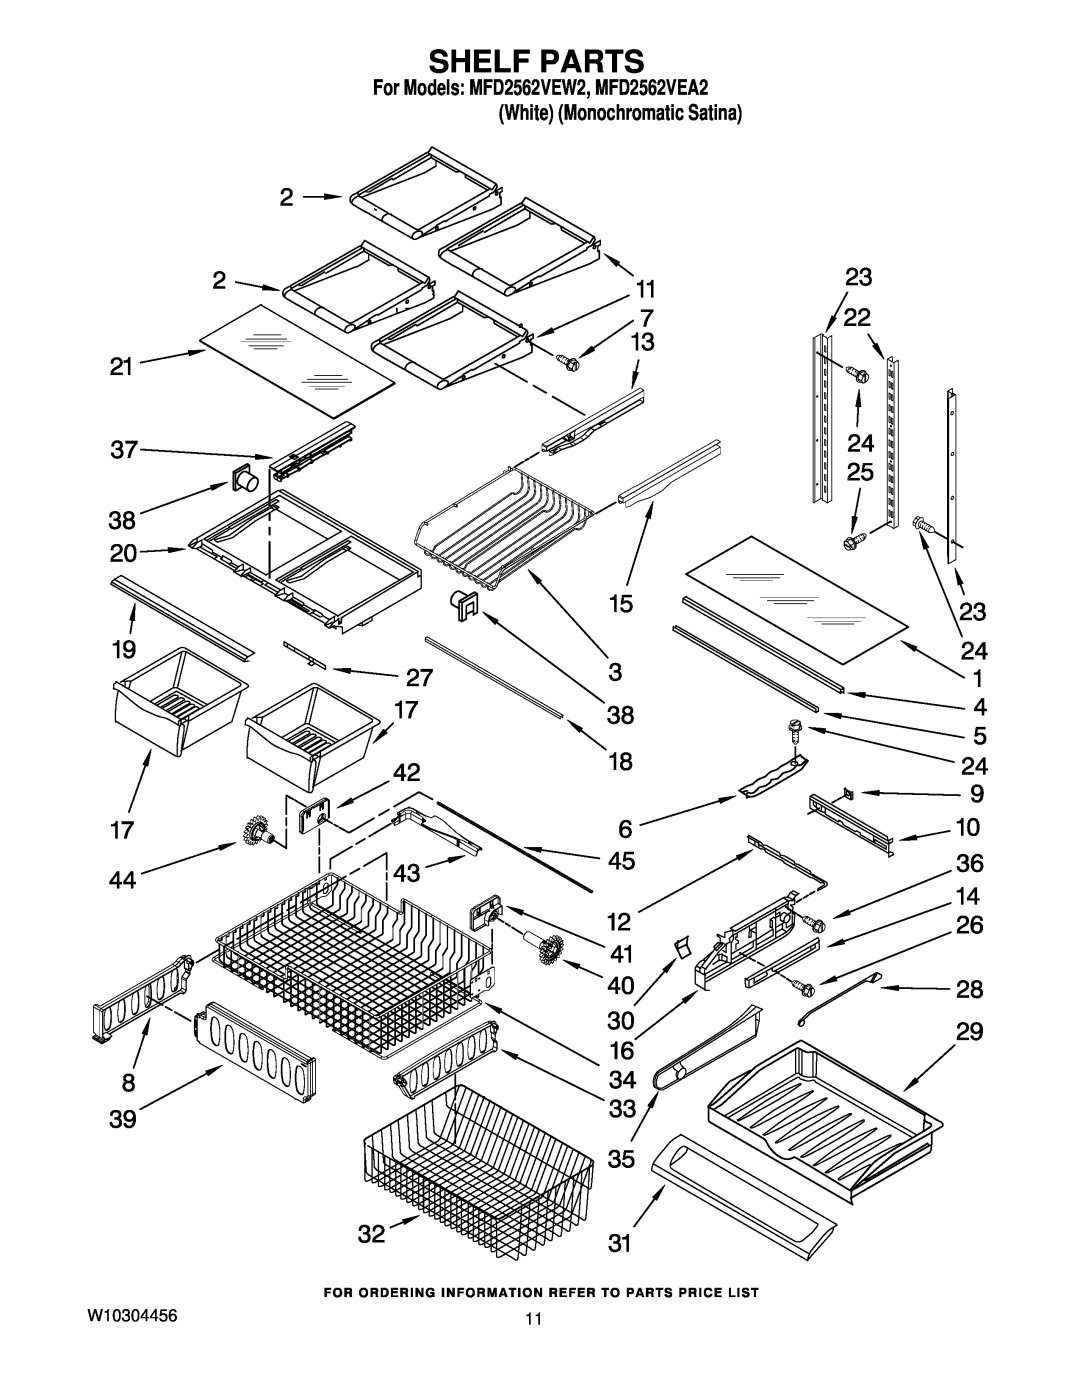 Maytag manual Shelf Parts, W10304456, For Models MFD2562VEW2, MFD2562VEA2 White Monochromatic Satina 